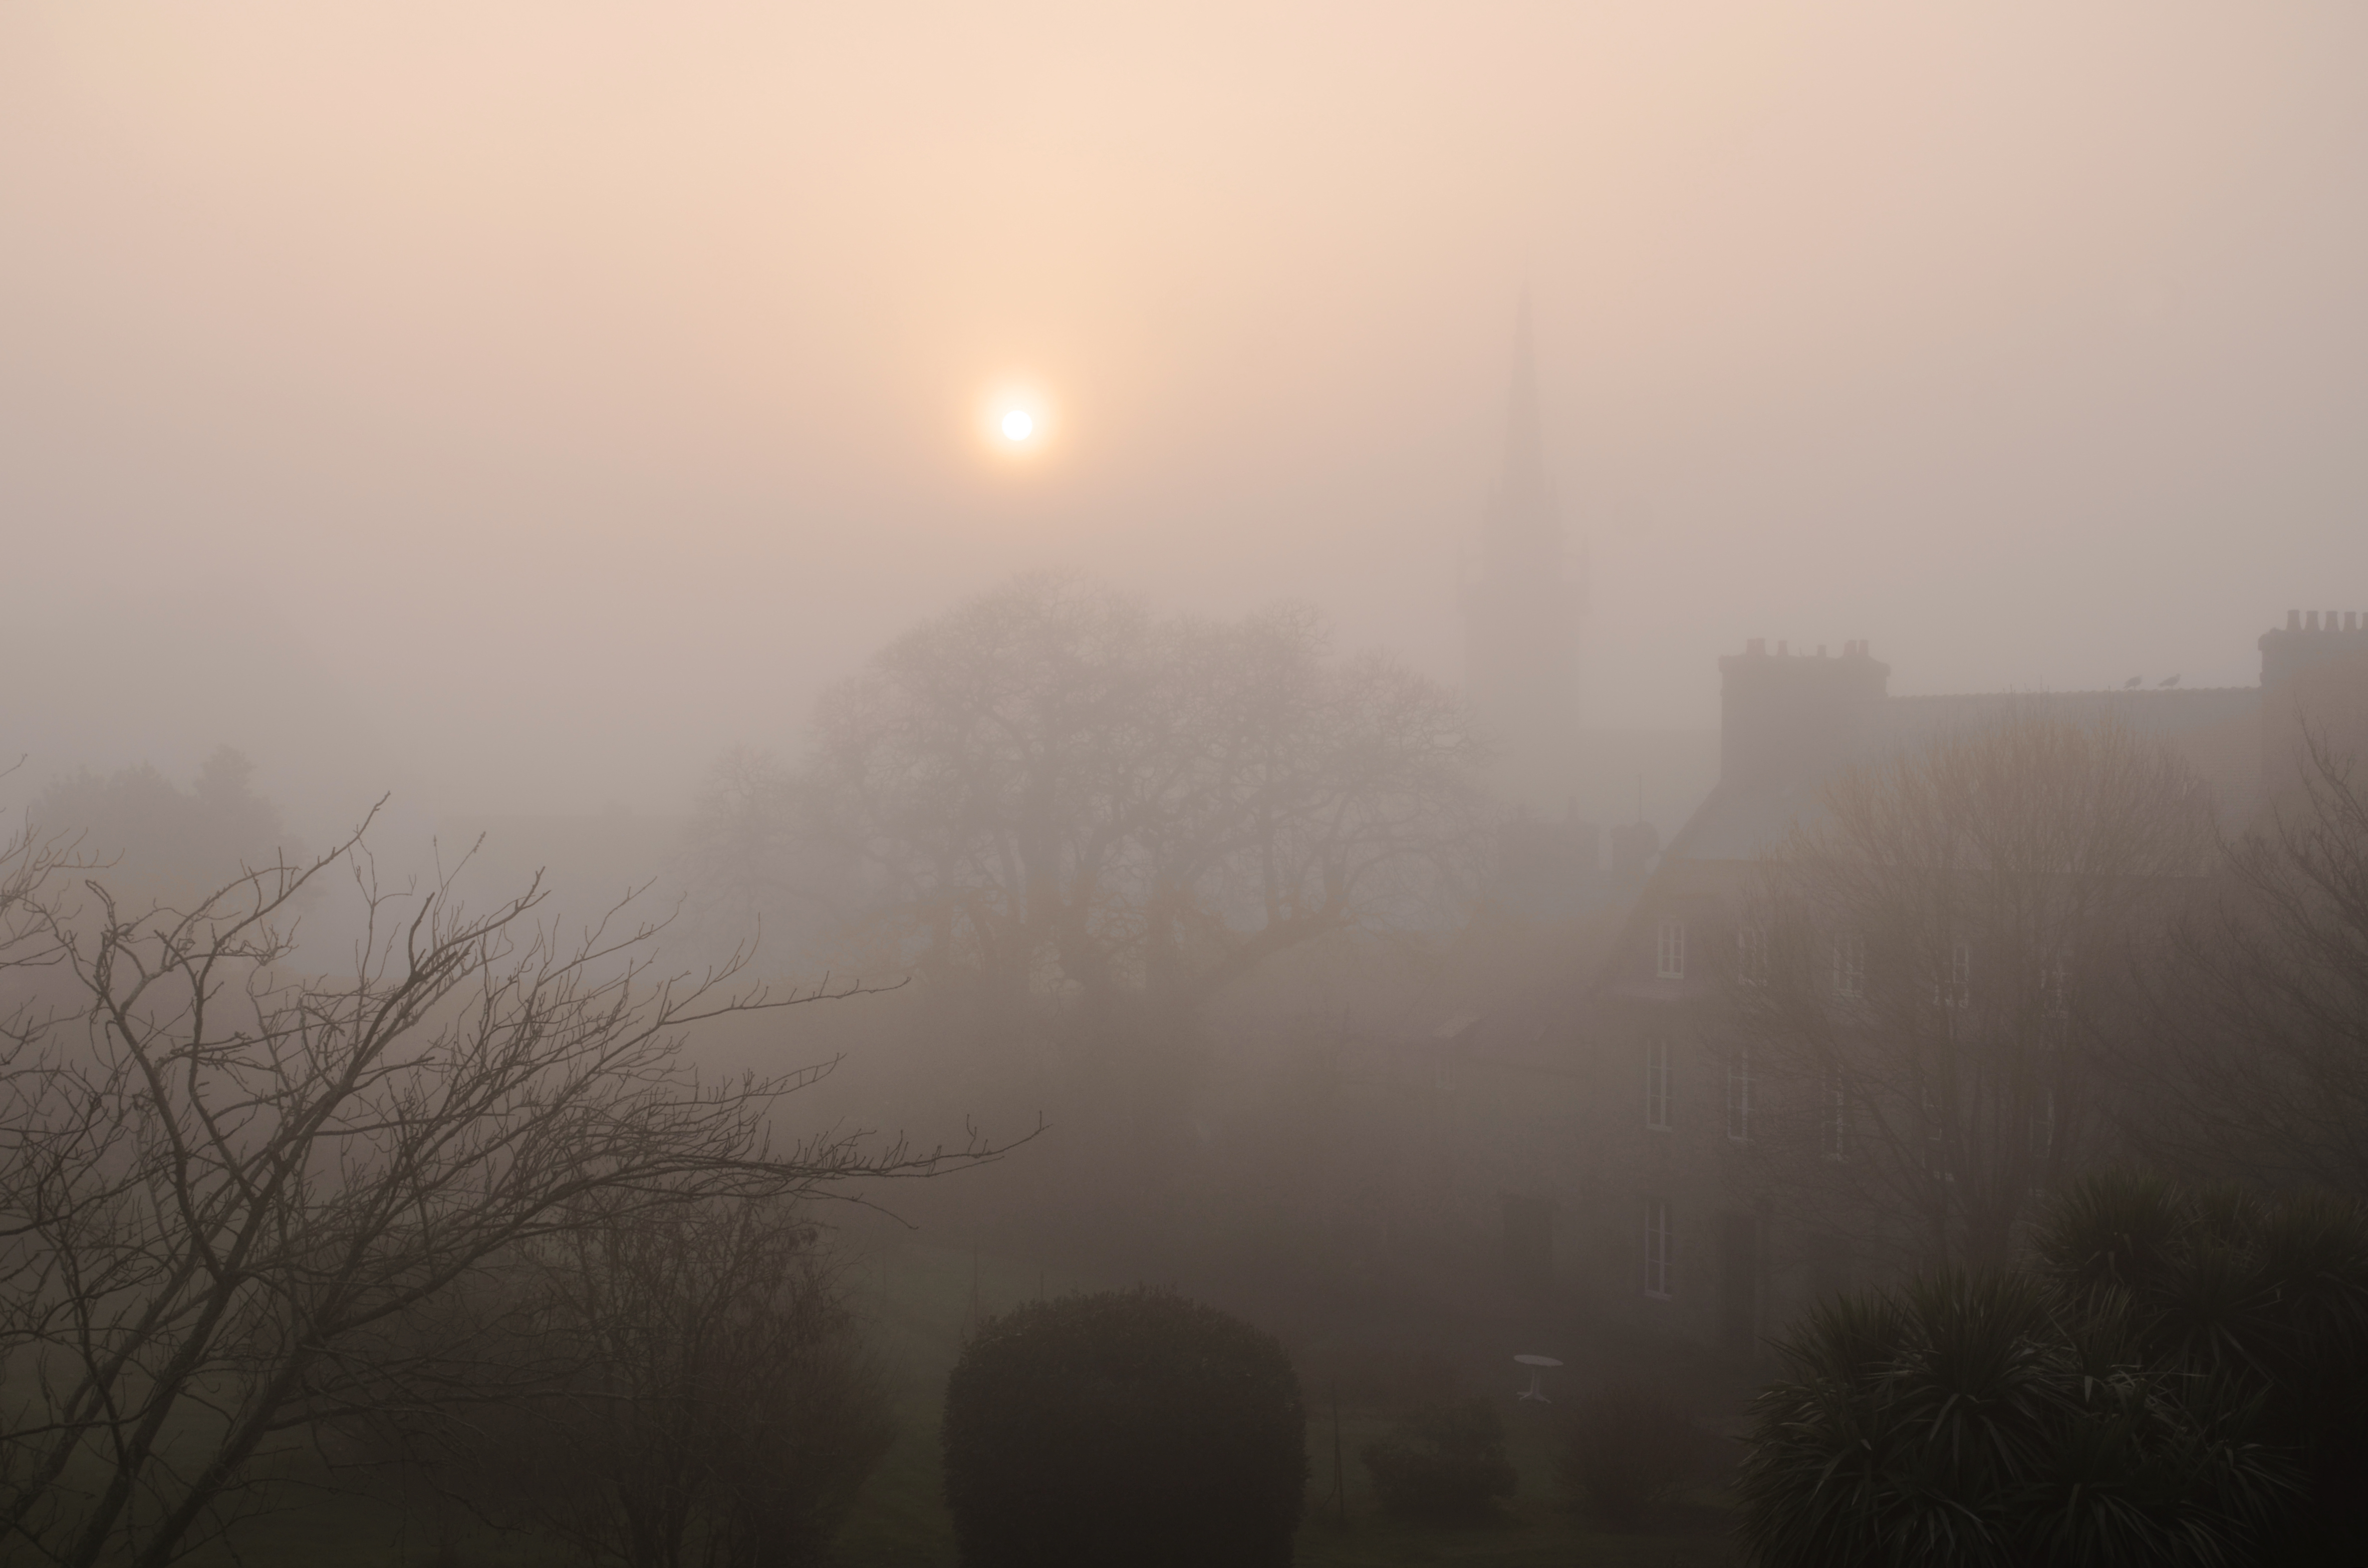 File:Misty morning in st pol de leon, France.jpg - Wikimedia Commons